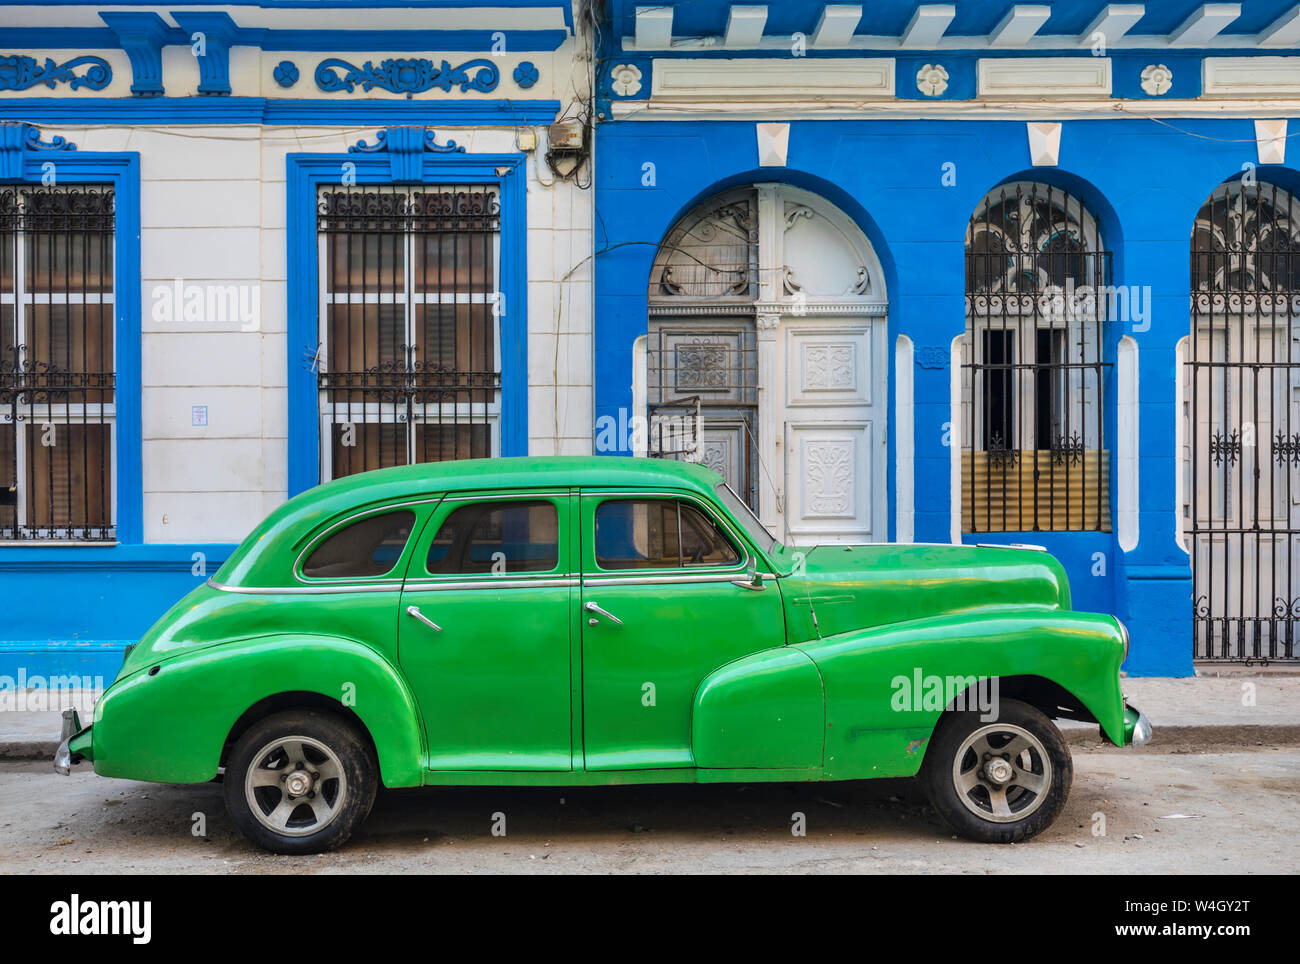 Geparkt freenas erklärt Oldtimer, Havanna, Kuba Stockfoto